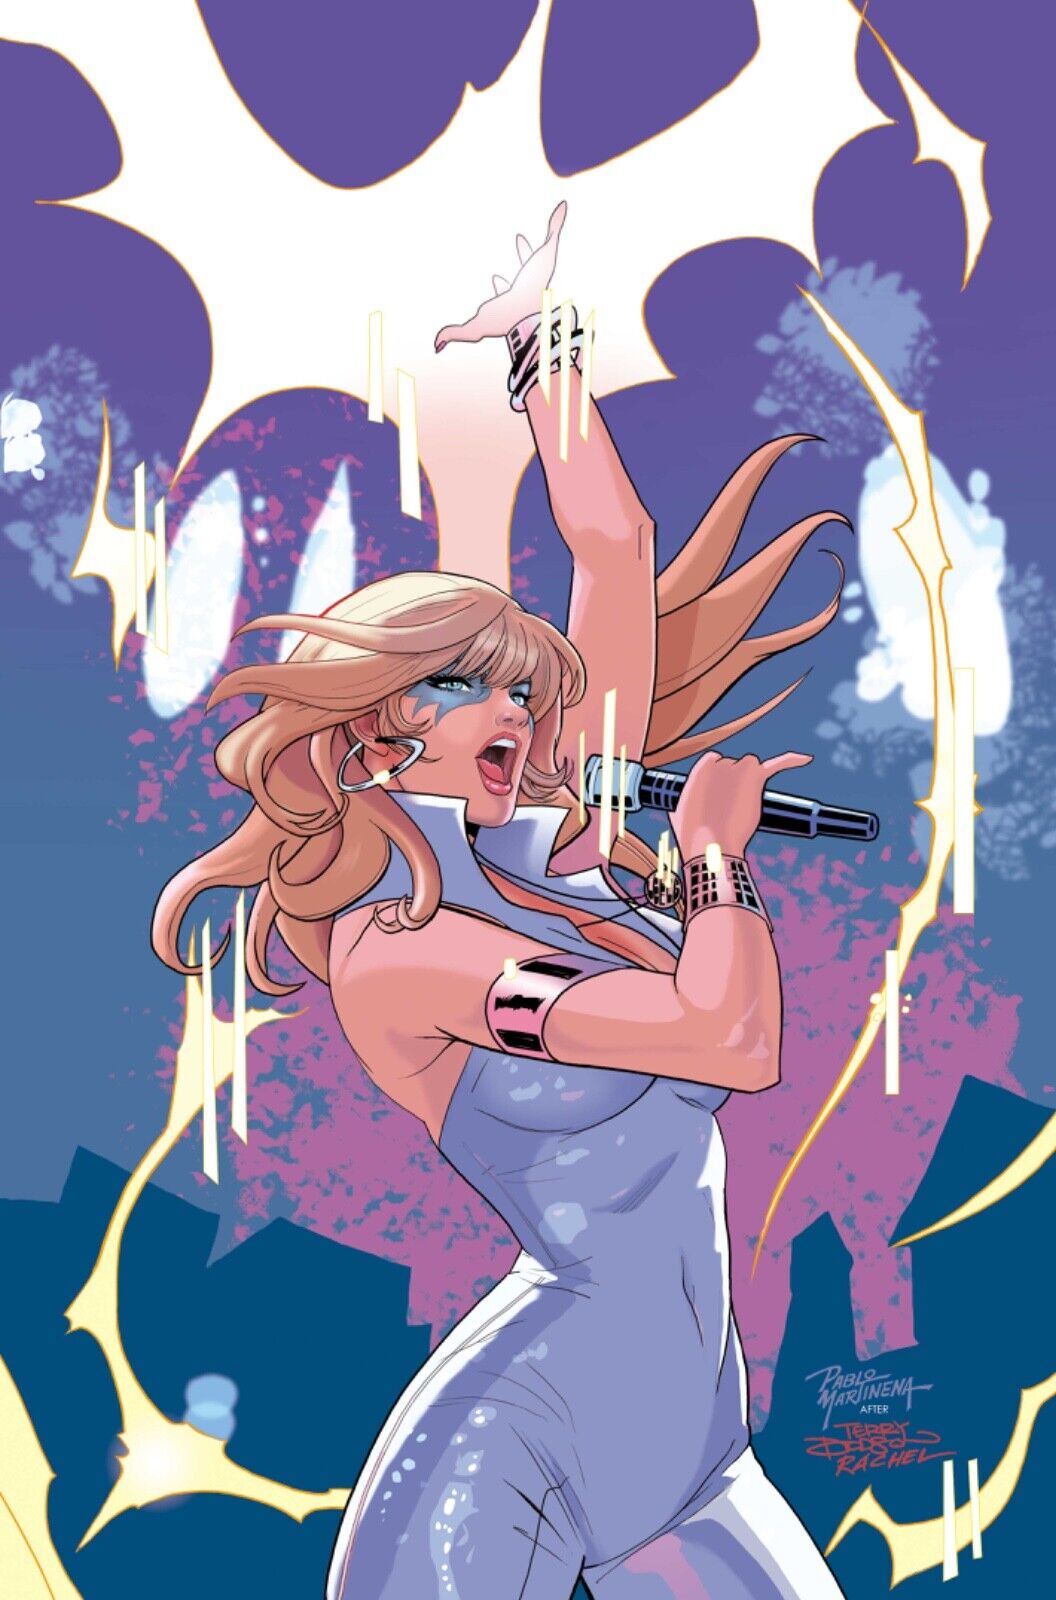 Female Force: Taylor Swift comic book bio SWIFTIES DAZZLER edition METAL COVER